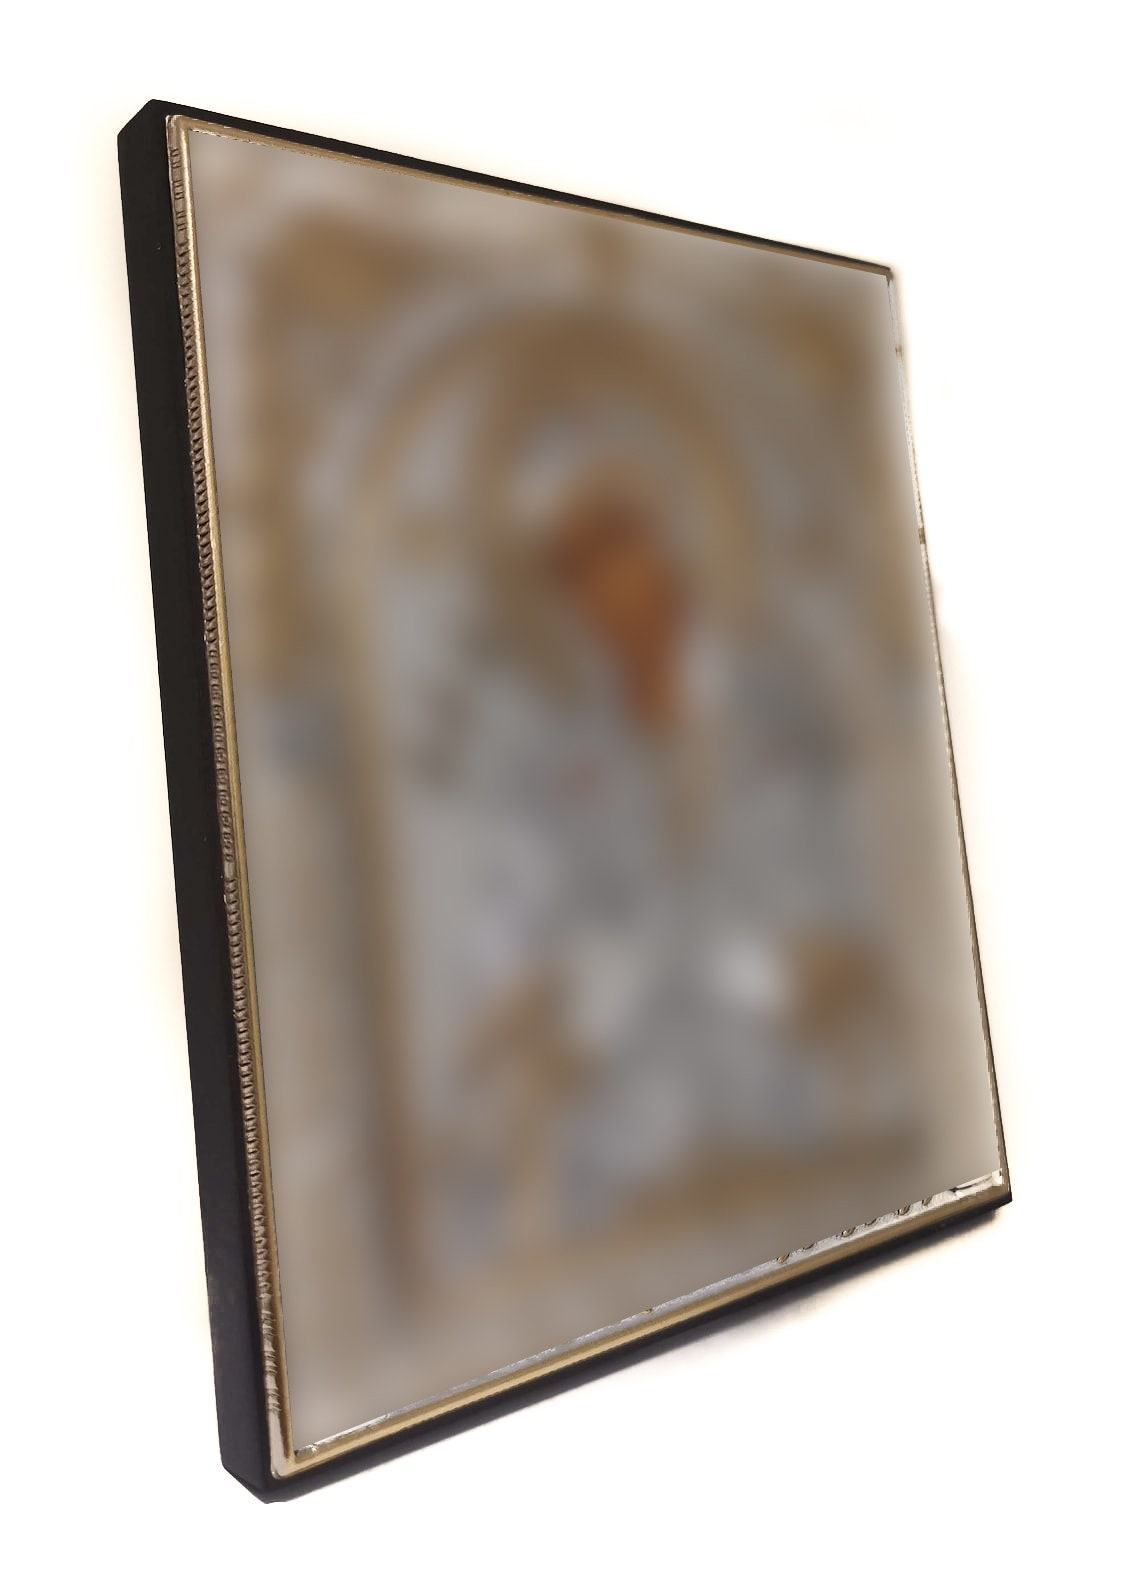 Saint Paraskevi icon, Handmade Silver 999 Greek Orthodox icon of St Paraskevi of Rome, Byzantine art wall hanging on wood religious plaque